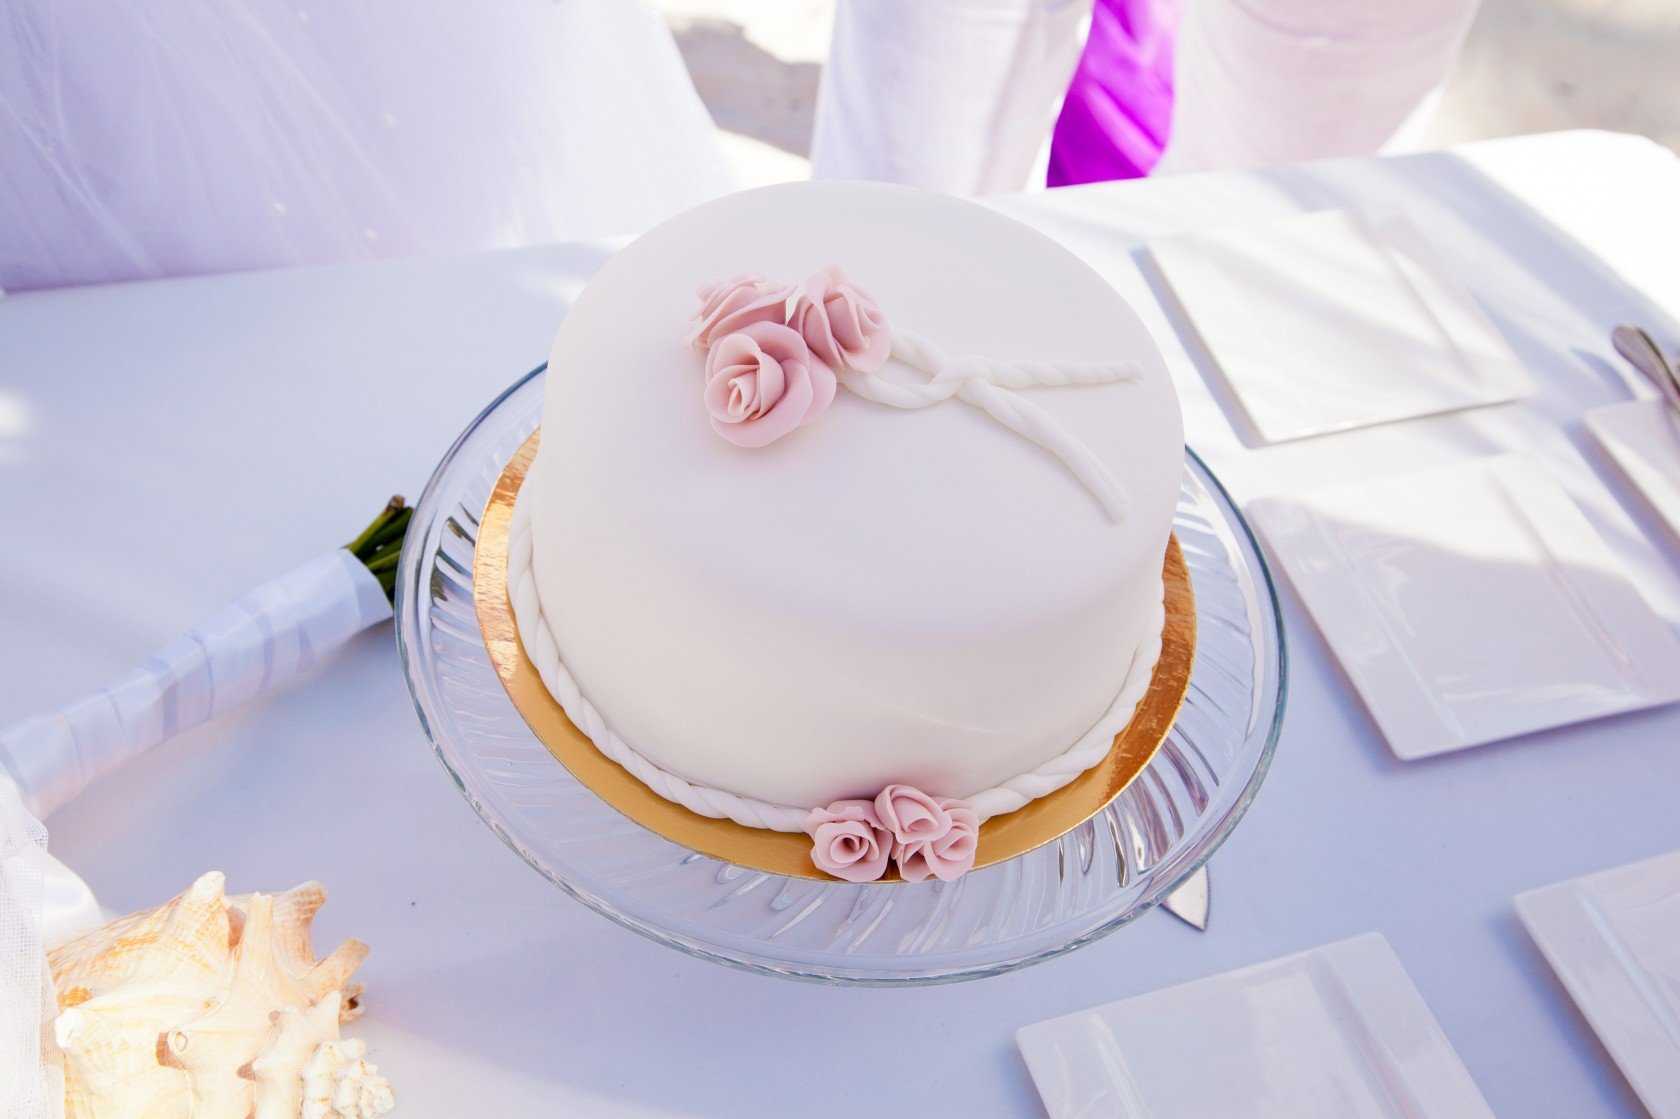 Свадебный торт в стиле прованс - идеи оформления с фото